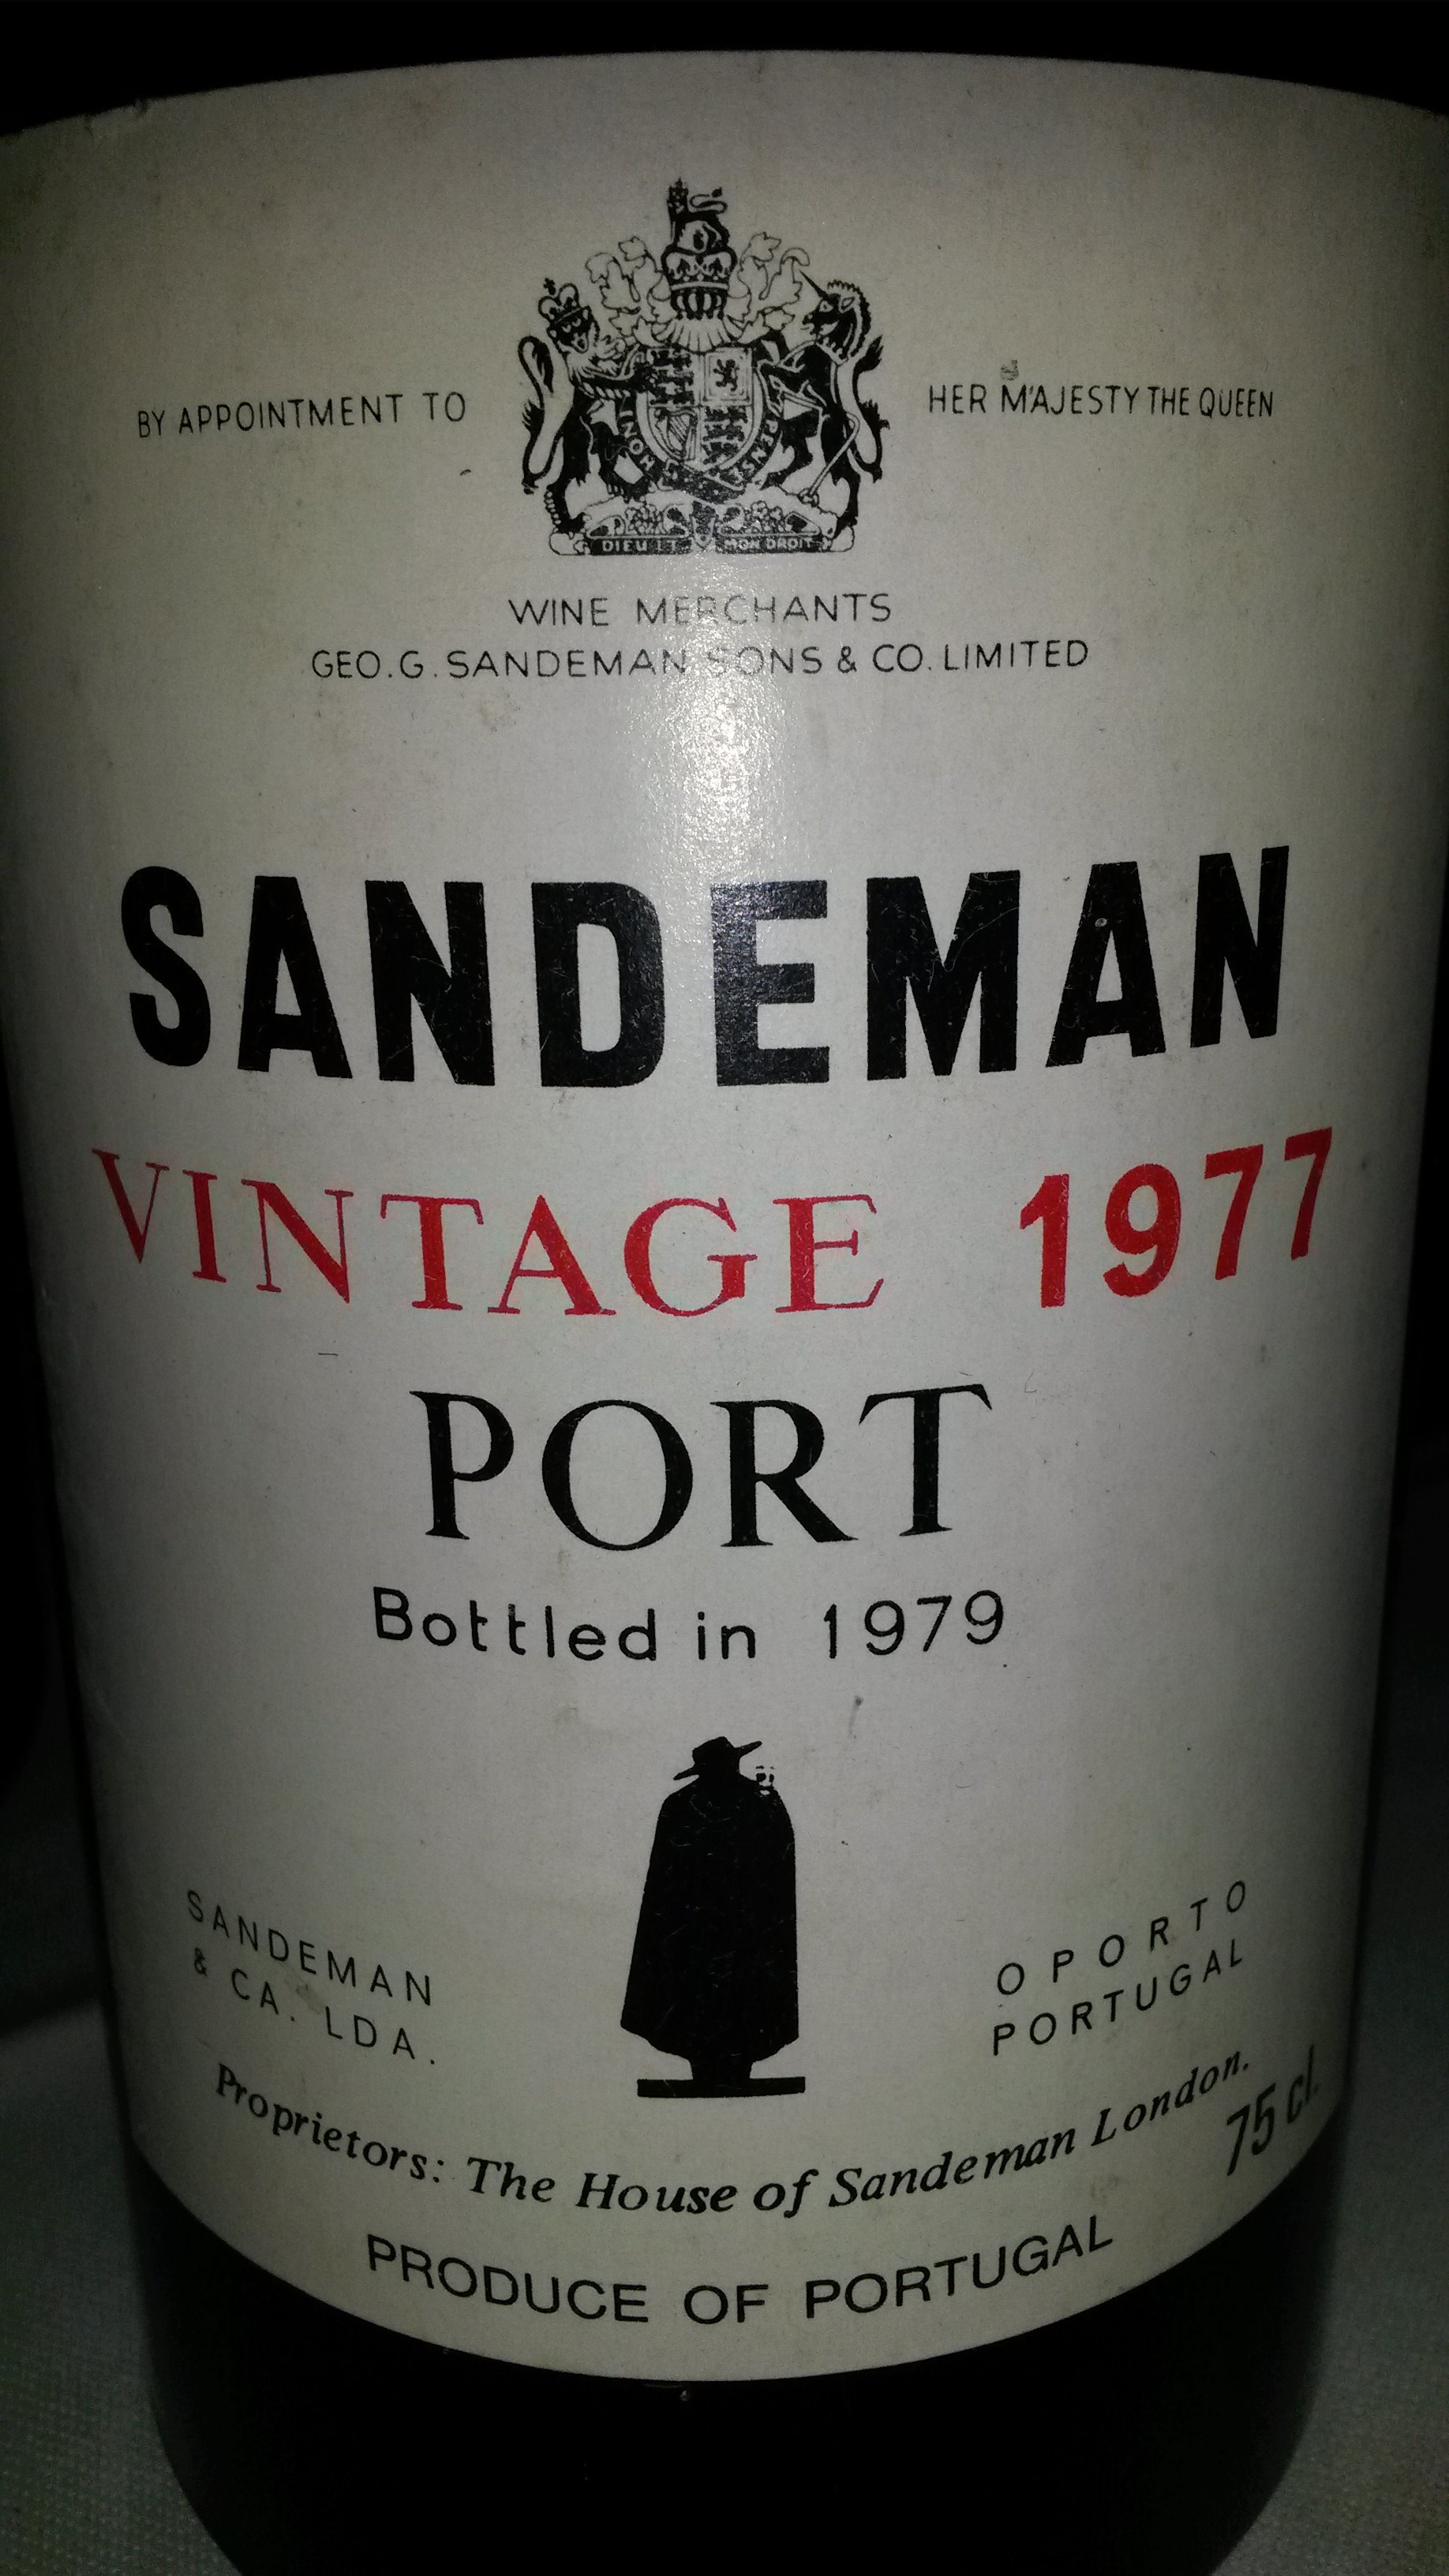 Sandeman vintage 77